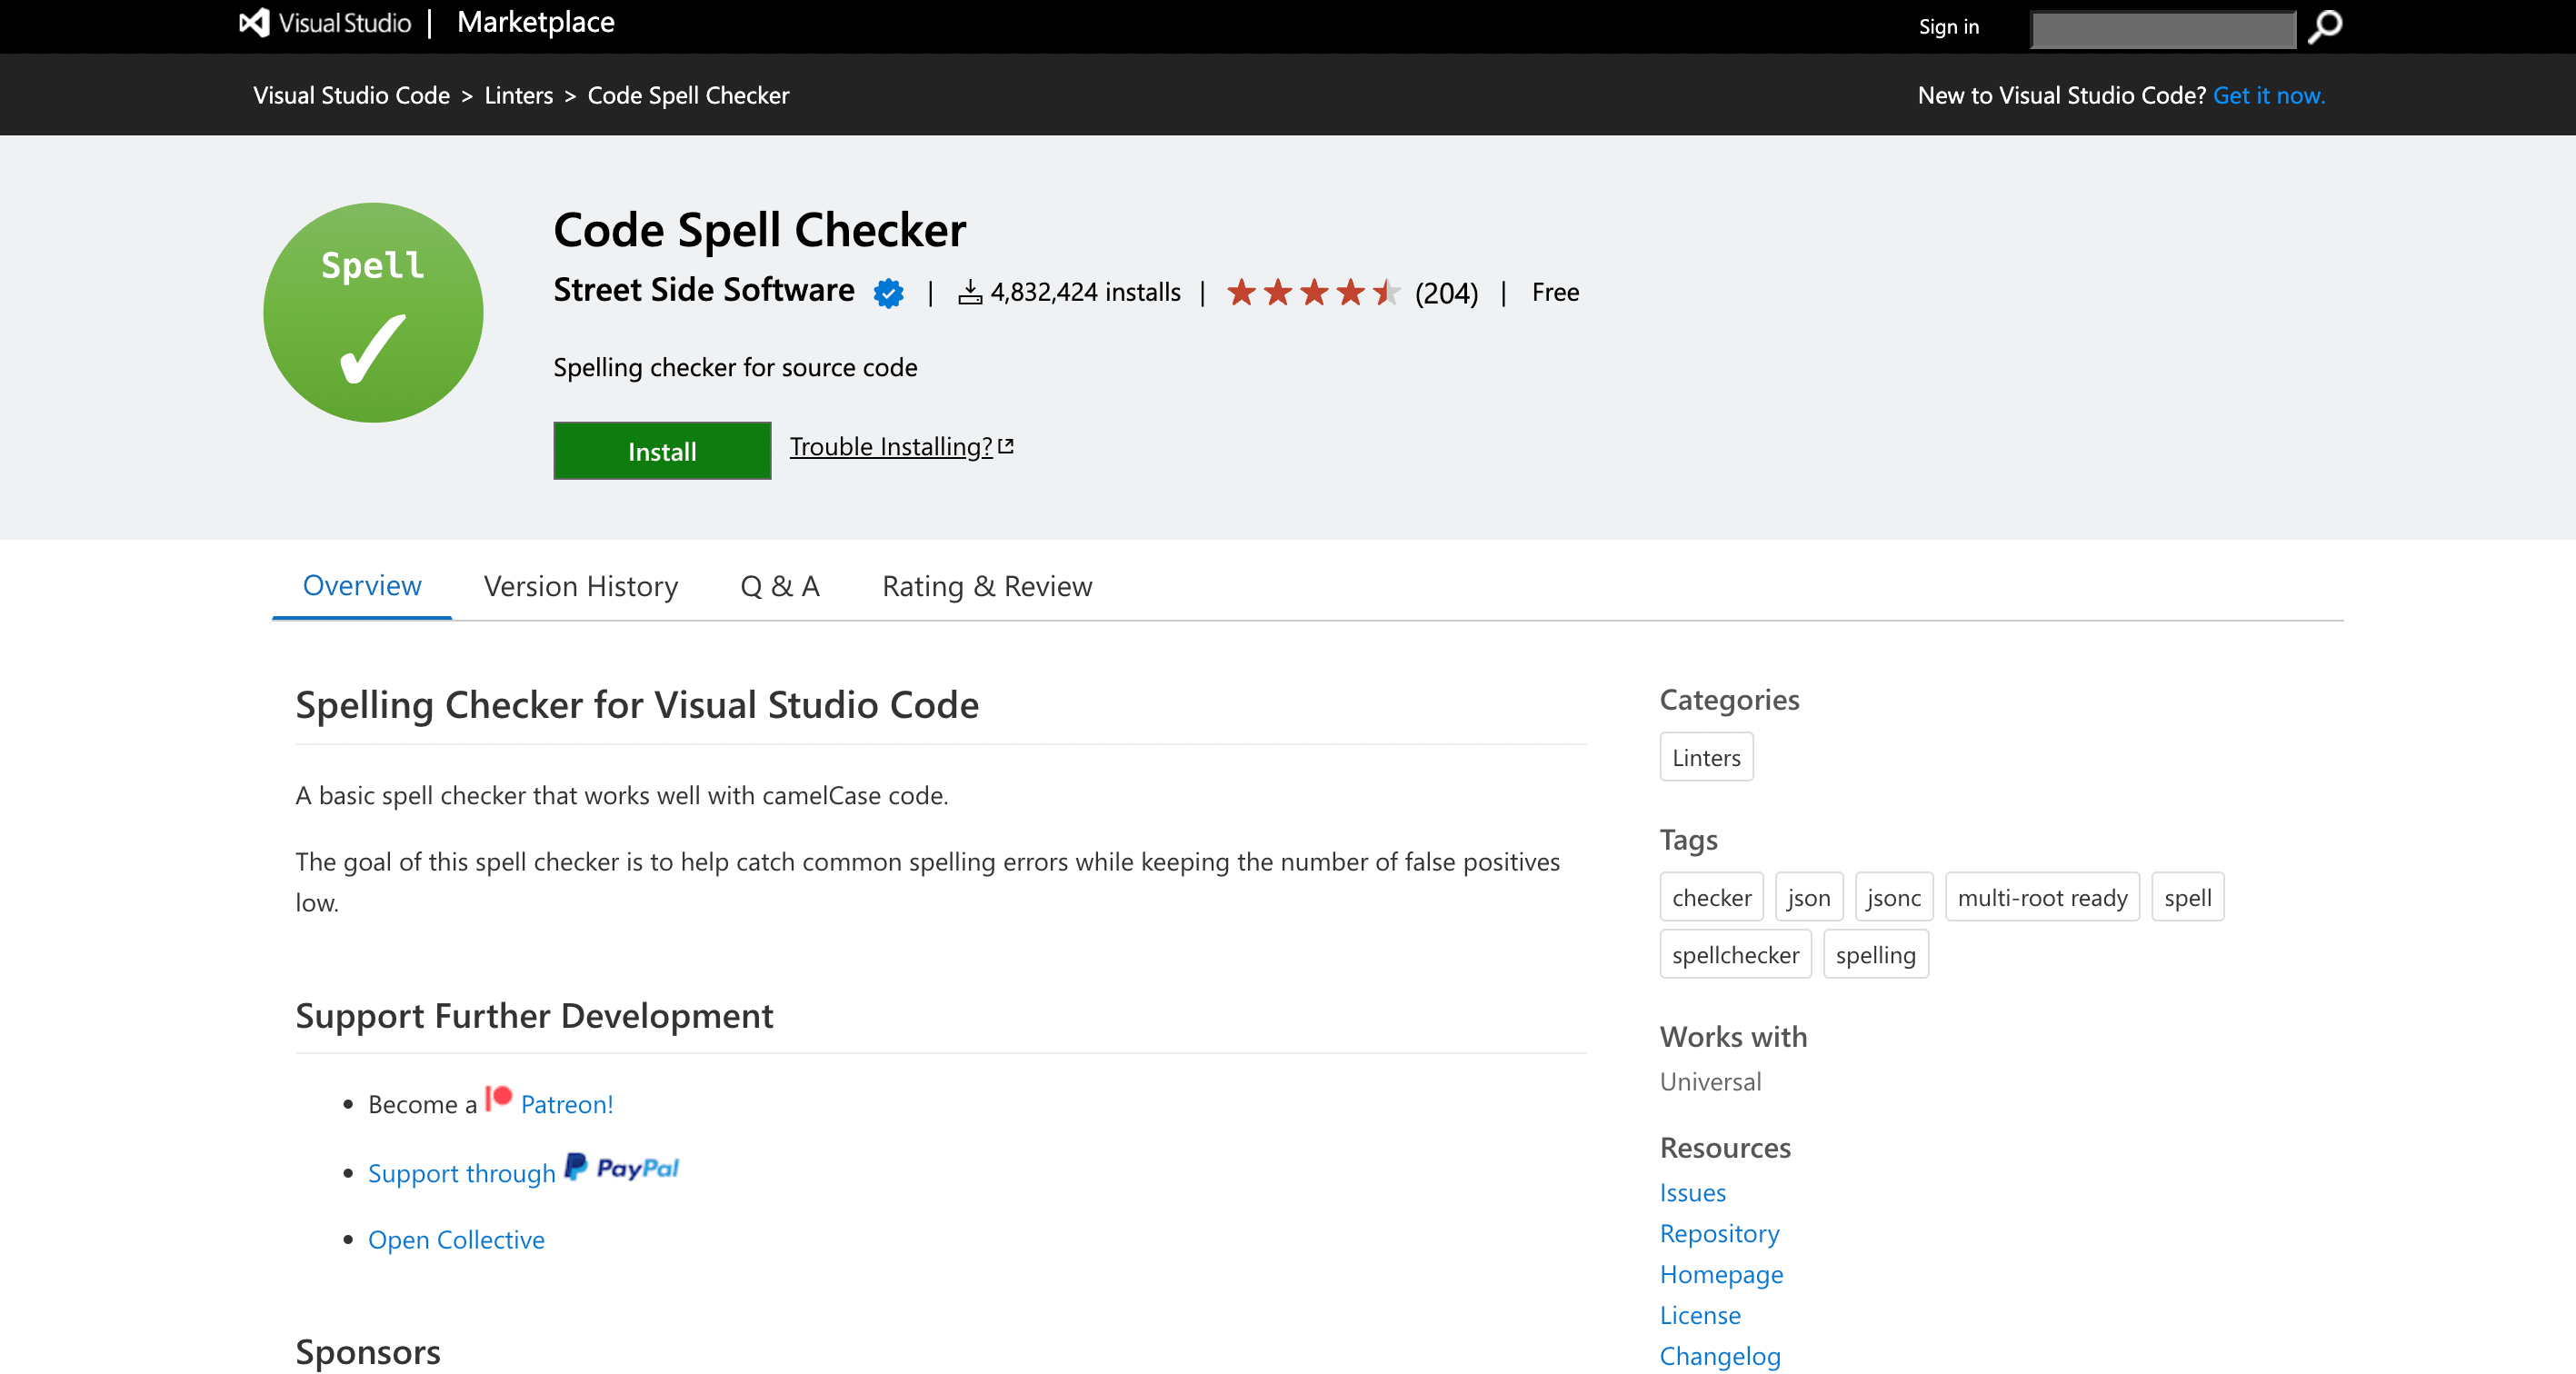 Code Spell Checker